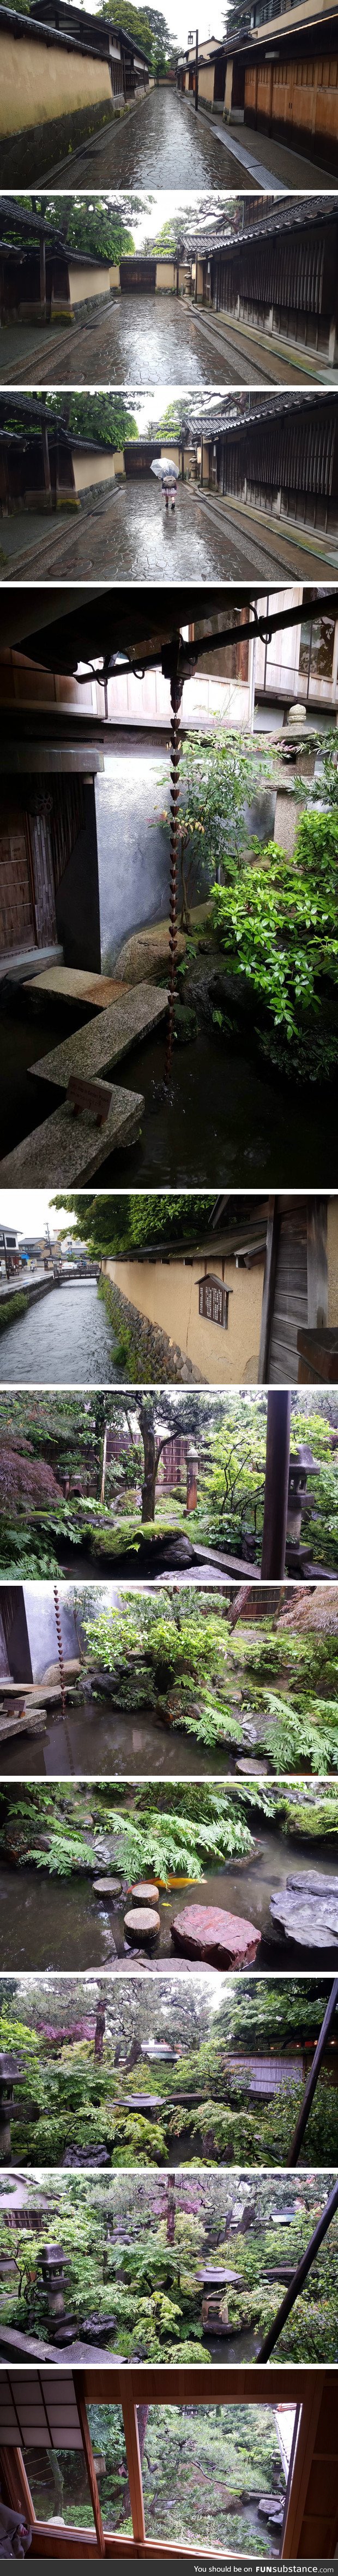 Photos from a preserved Samurai street and garden